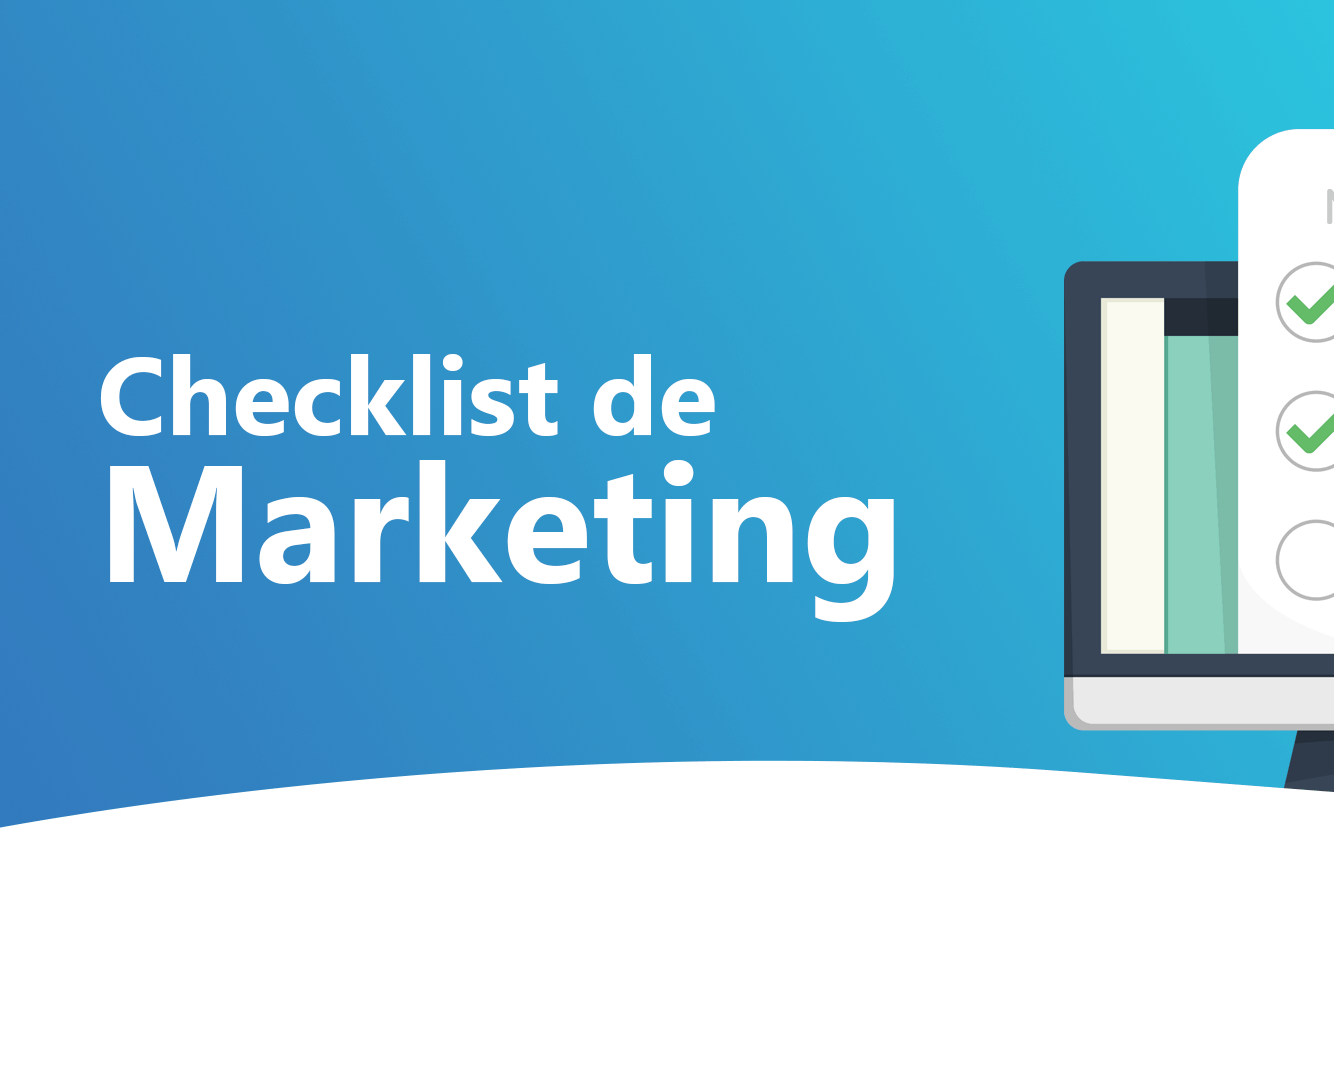 [MATERIAL RICO] Checklist de Marketing